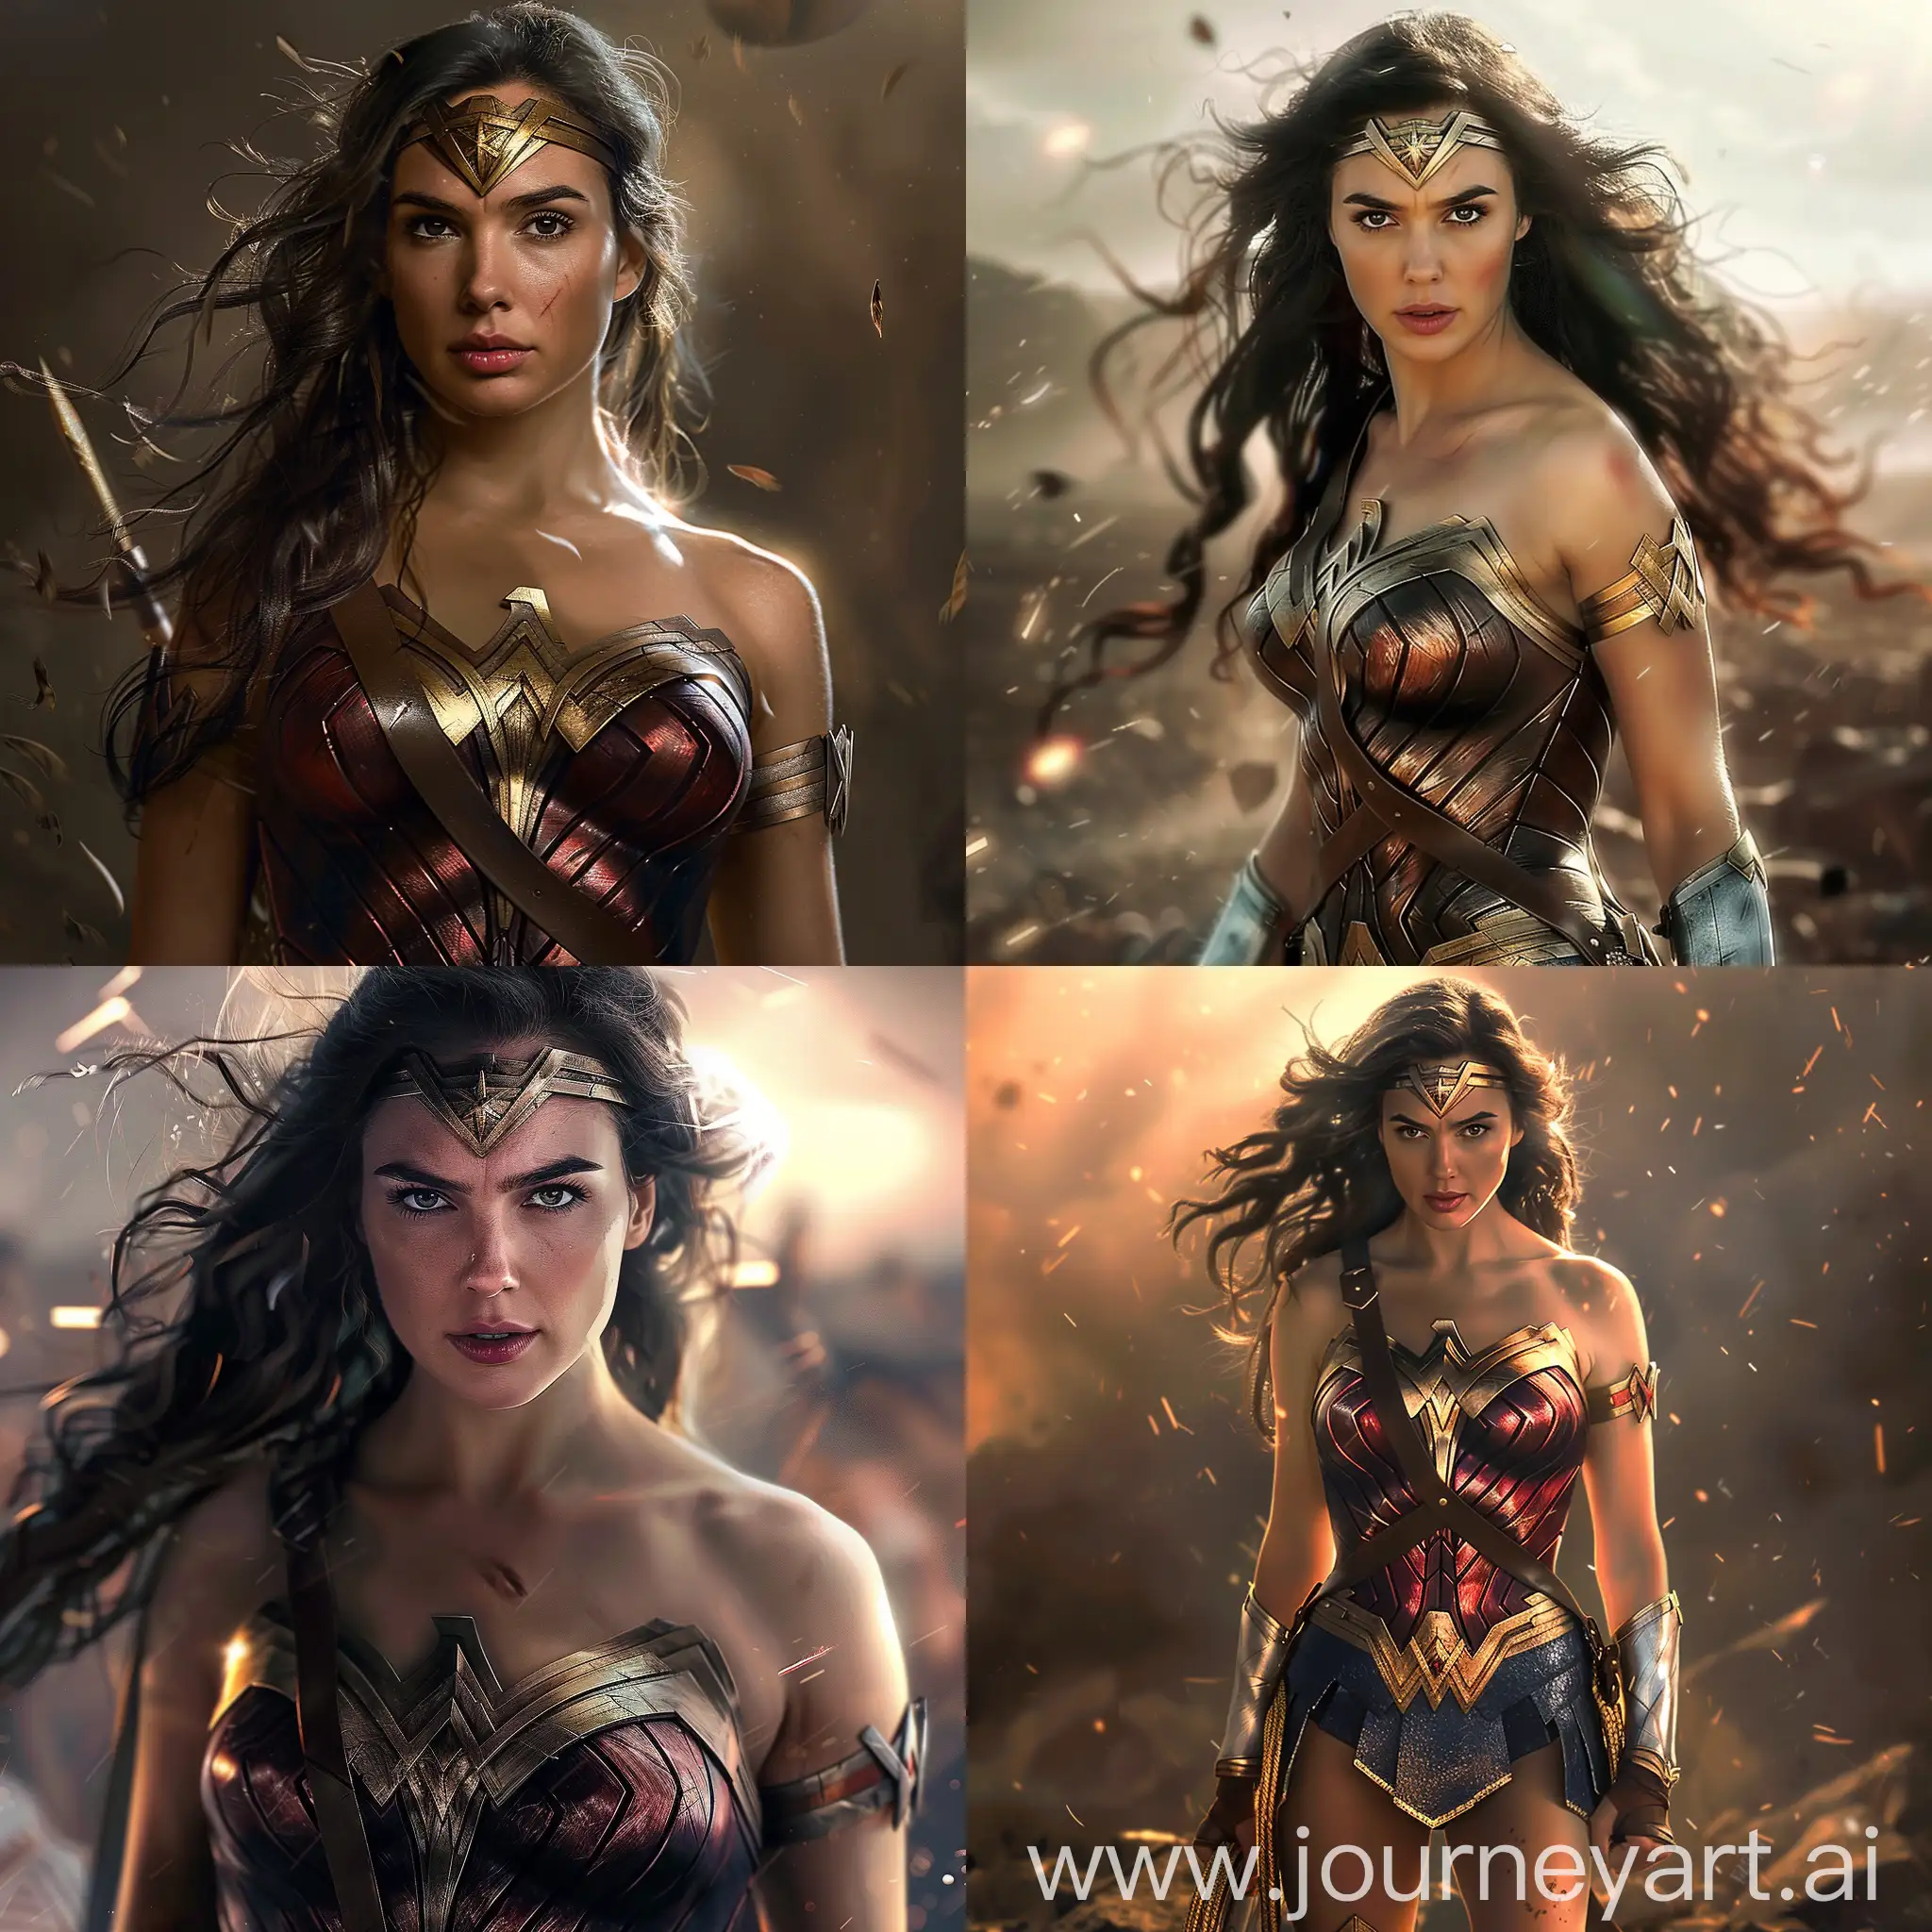 Epic-Cinematic-Portrait-of-Wonder-Woman-in-Battle